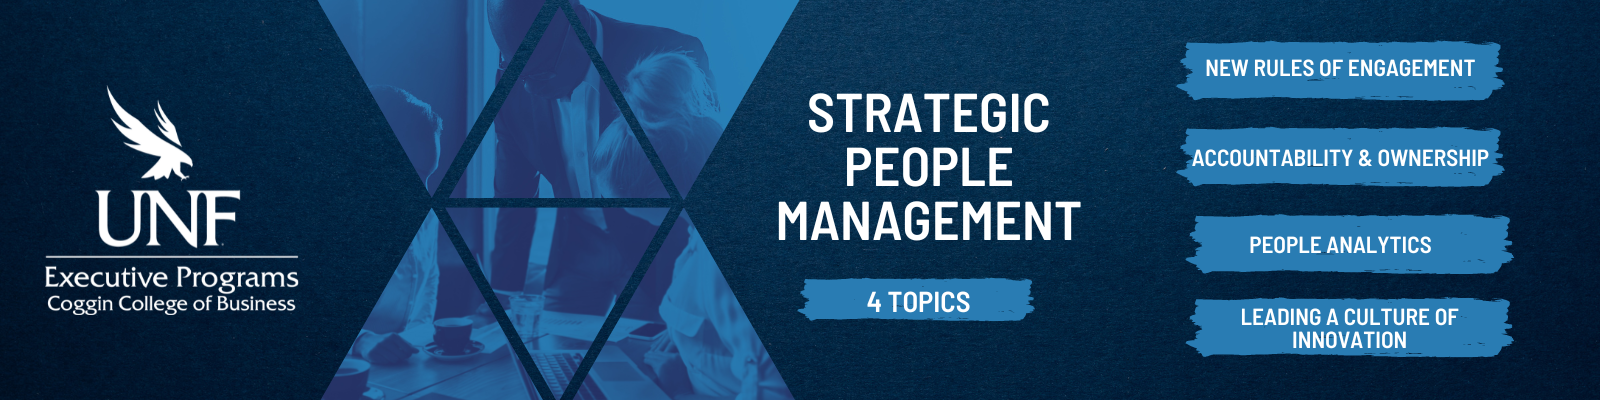 Strategic People Management 